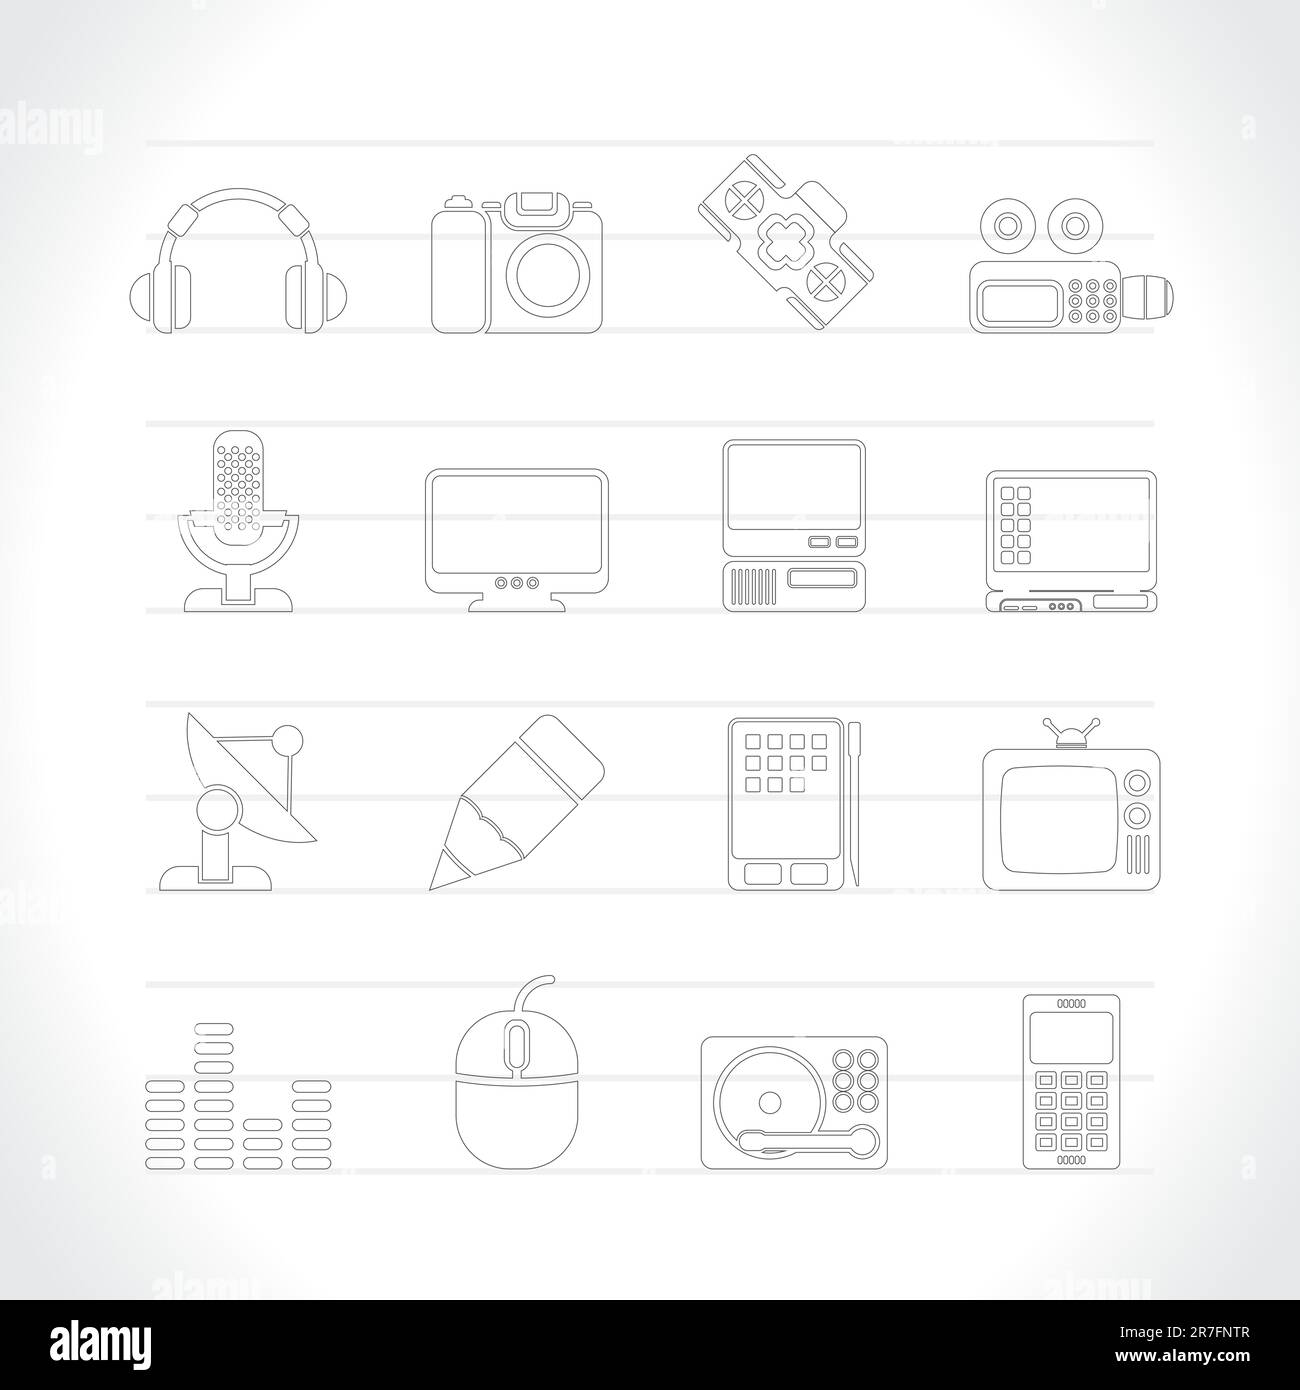 Media equipment icons - vector icon set Stock Vector